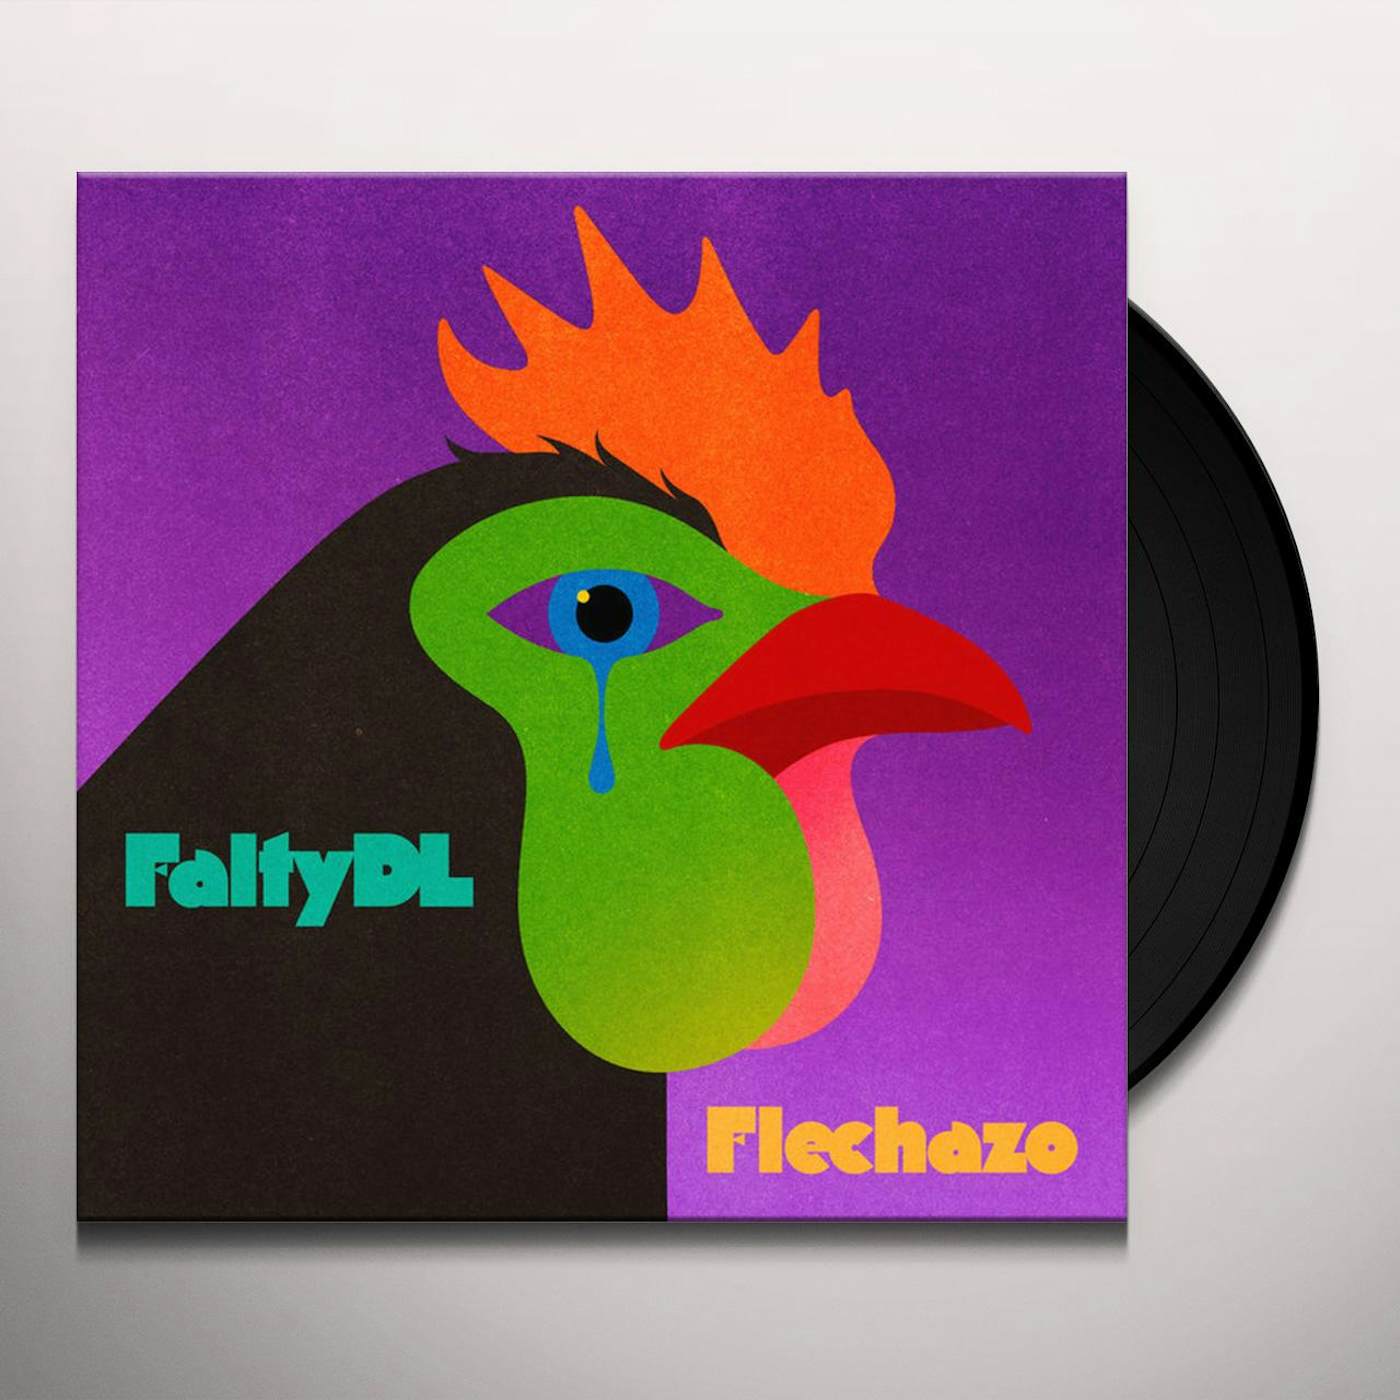 FaltyDL Flechazo Vinyl Record